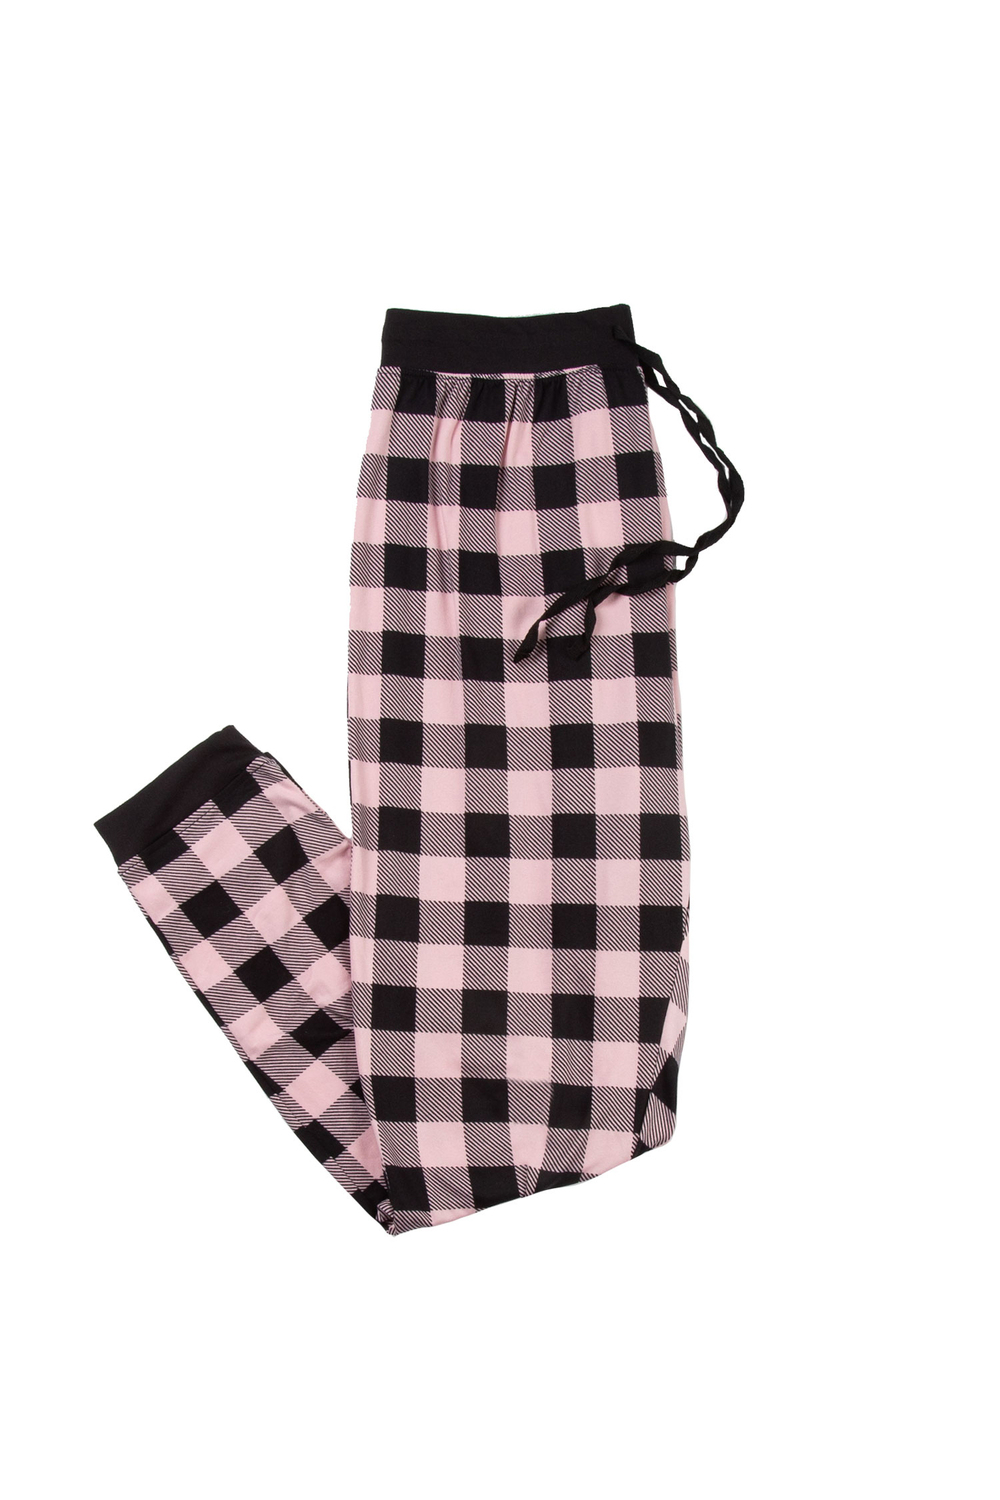 Stretch knit jogger style pajama pants, pink/black plaid, small (S)